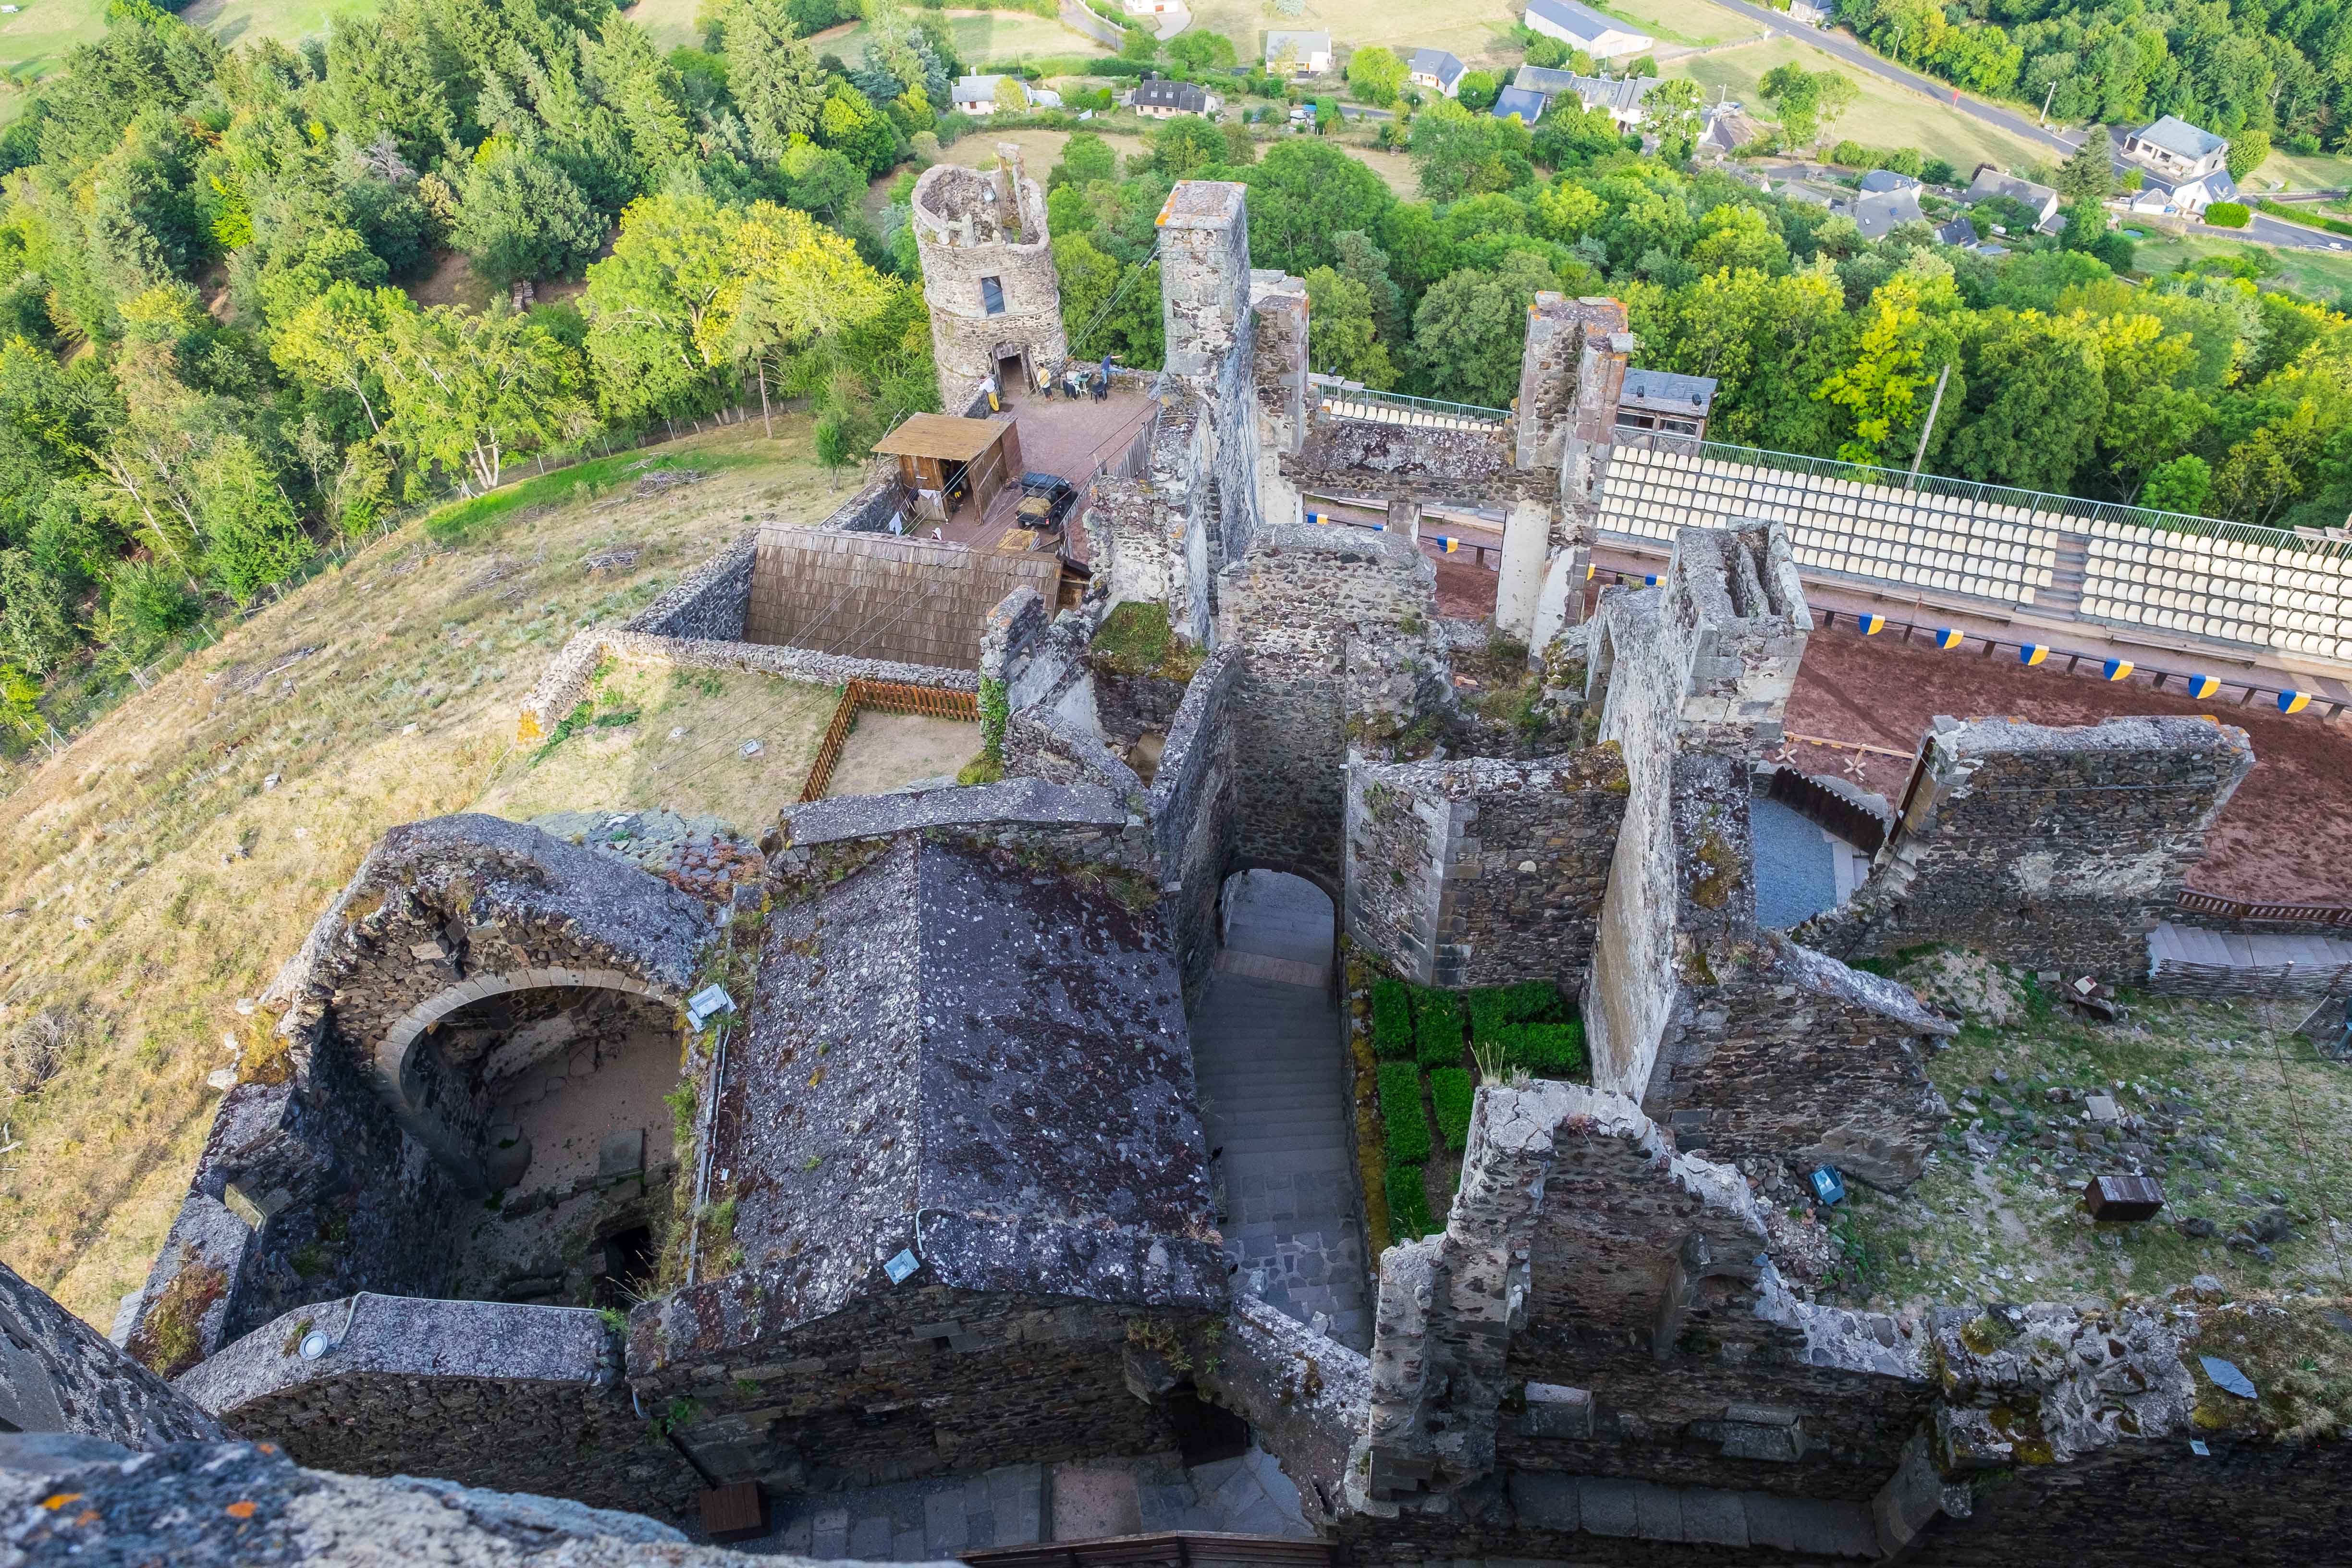 Murol castle - 4 quality high-definition images